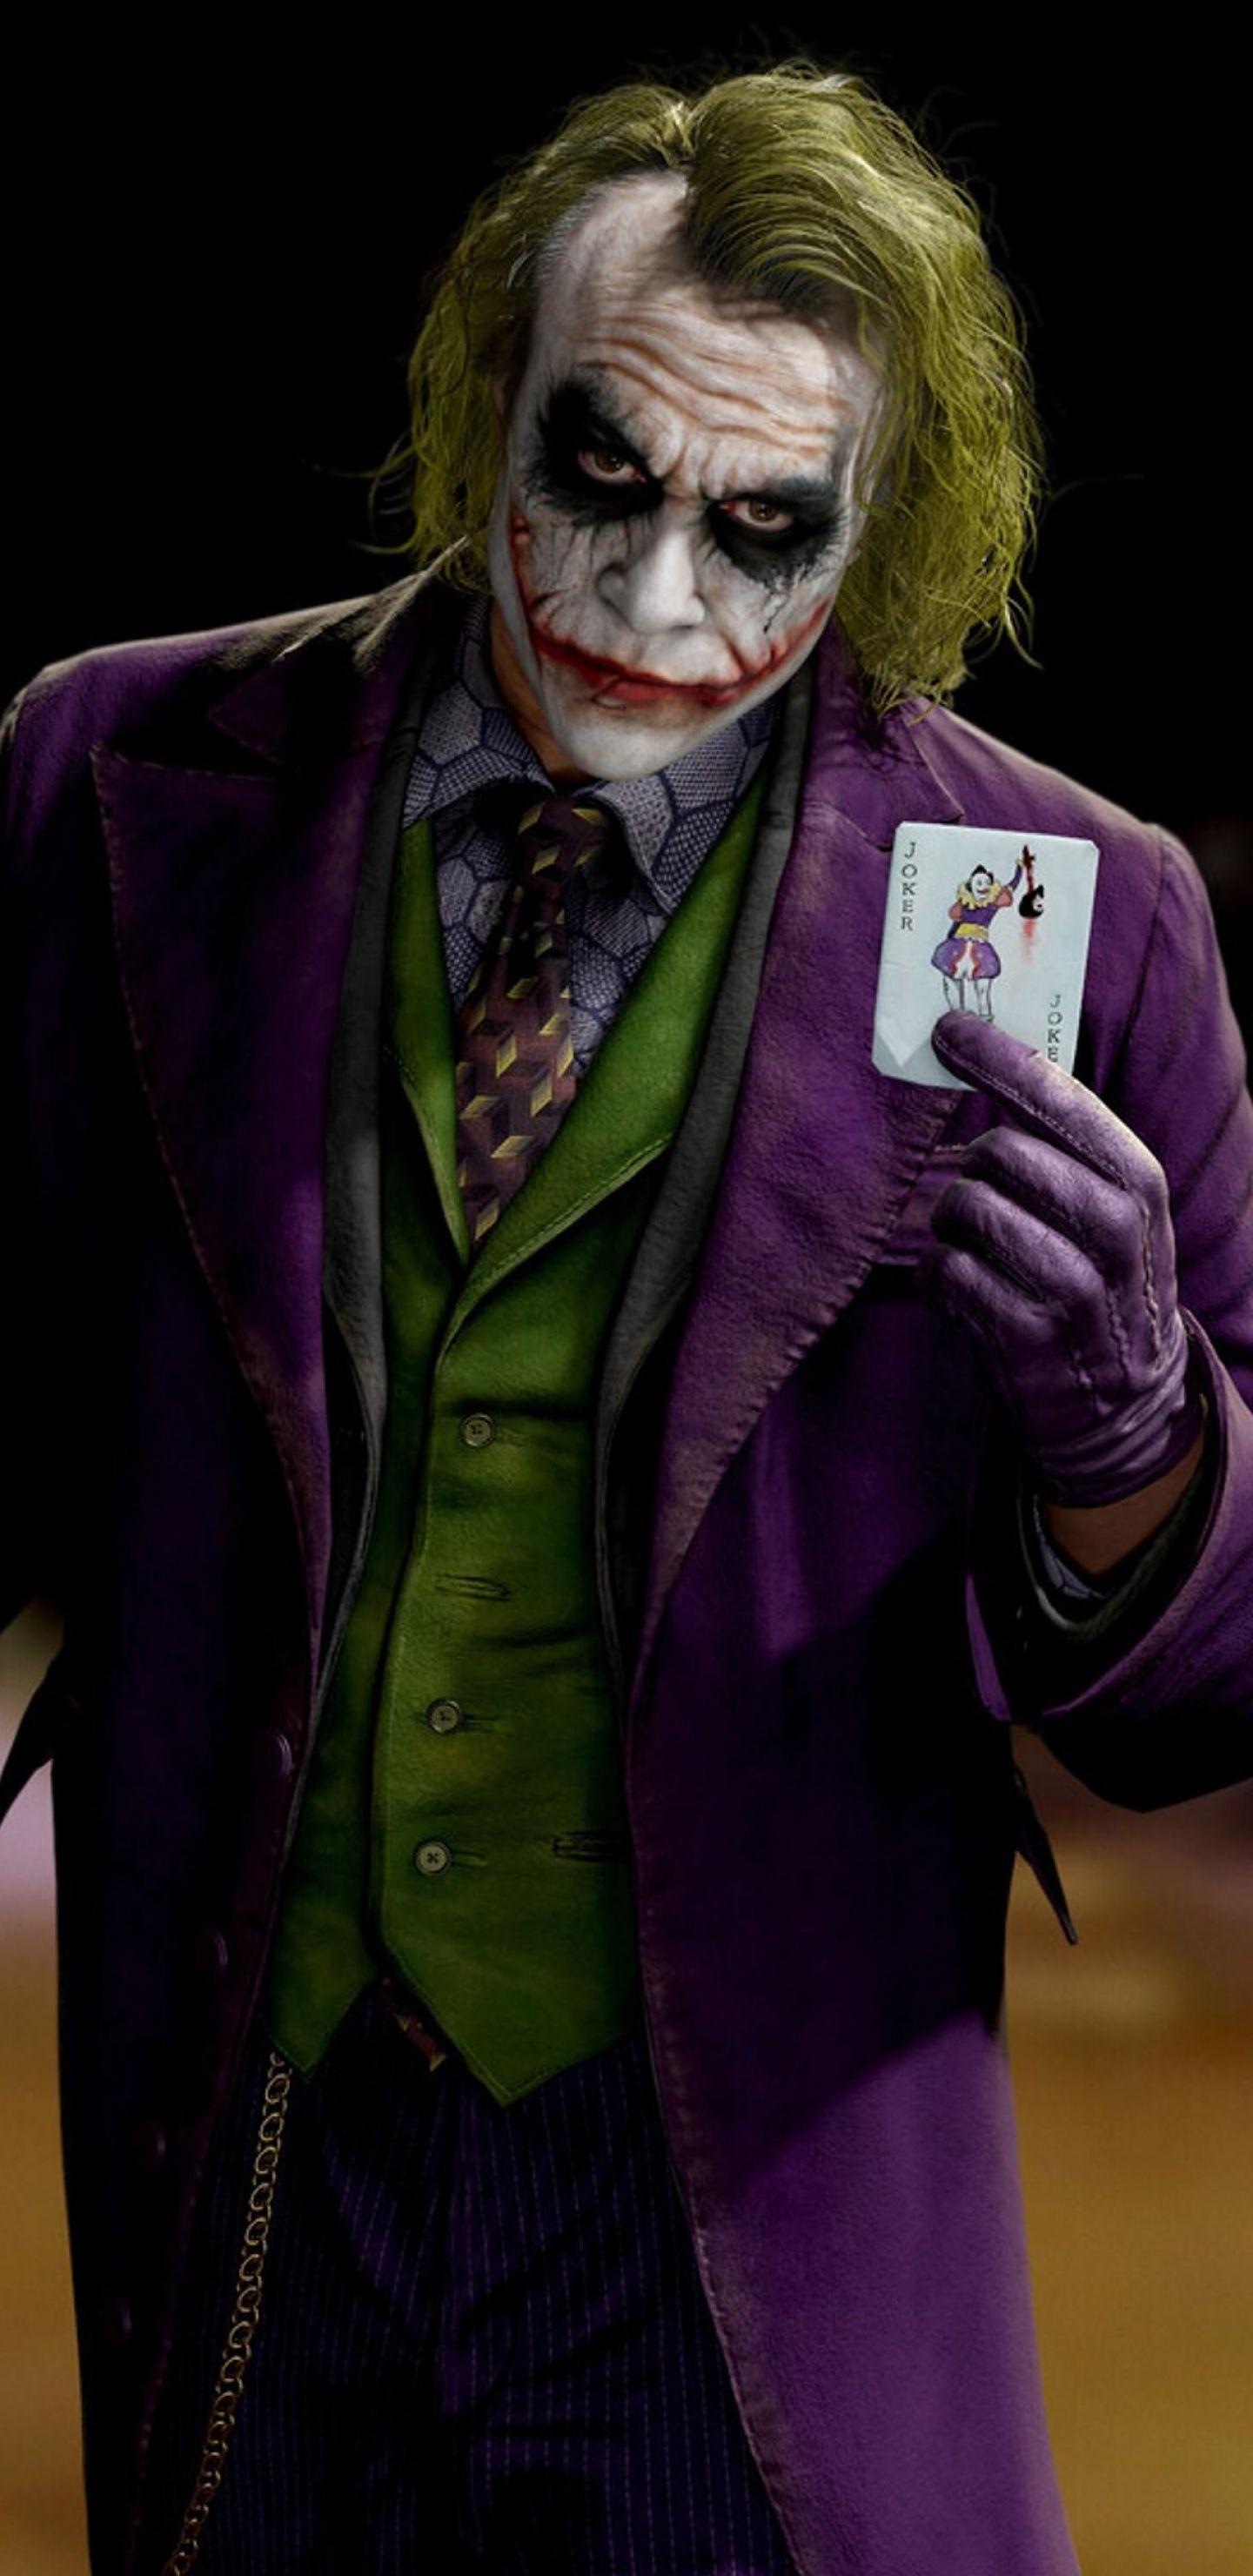 39+ Iphone 11 Wallpaper Hd 4K Joker